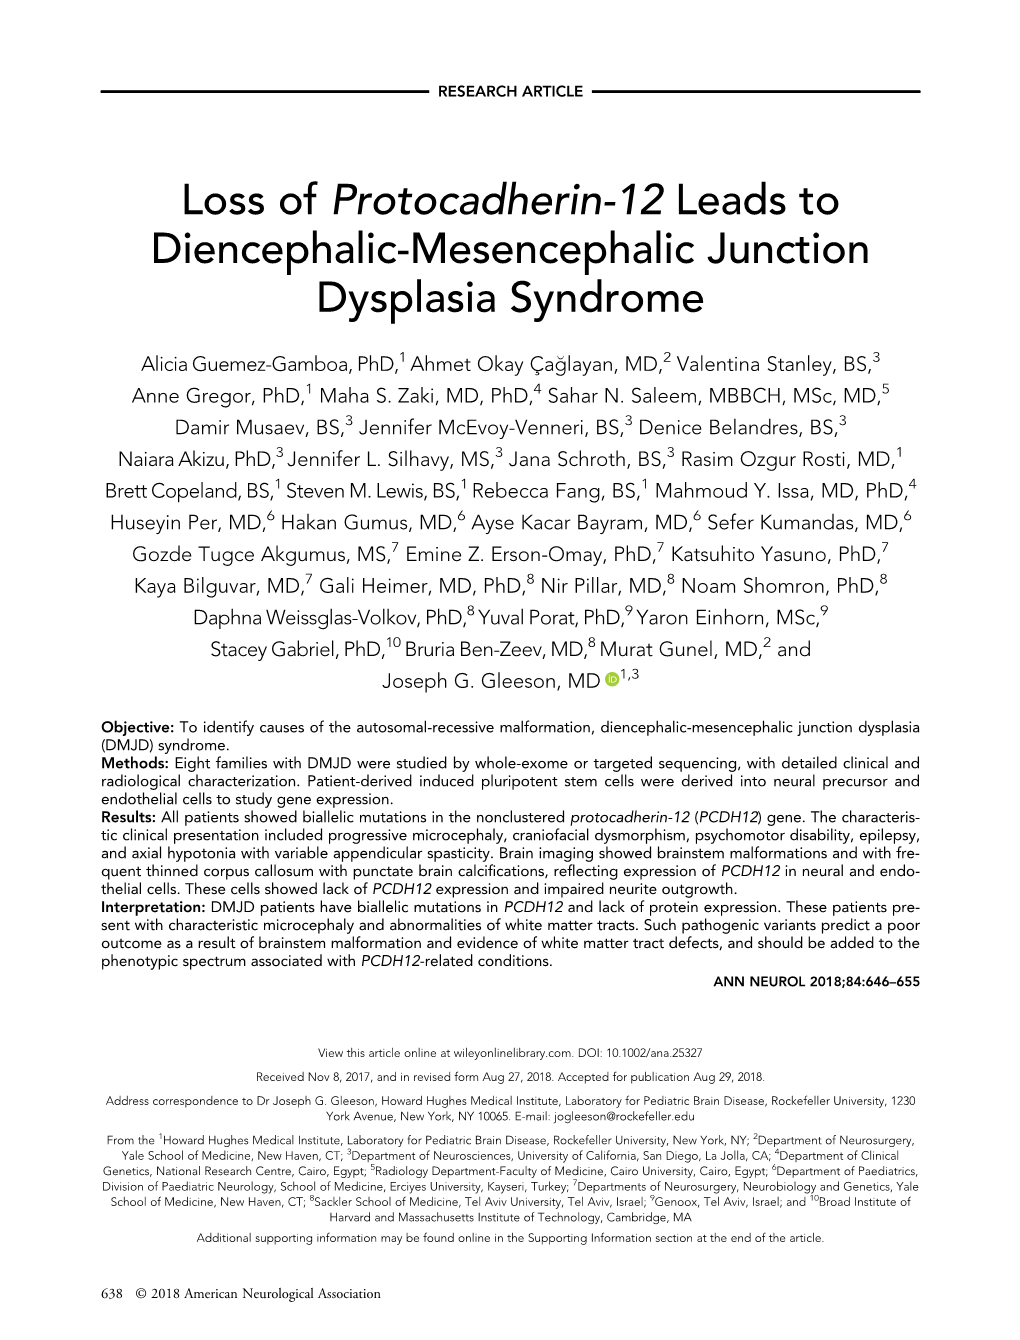 Loss of Protocadherin-12 Leads to Diencephalic-Mesencephalic Junction Dysplasia Syndrome